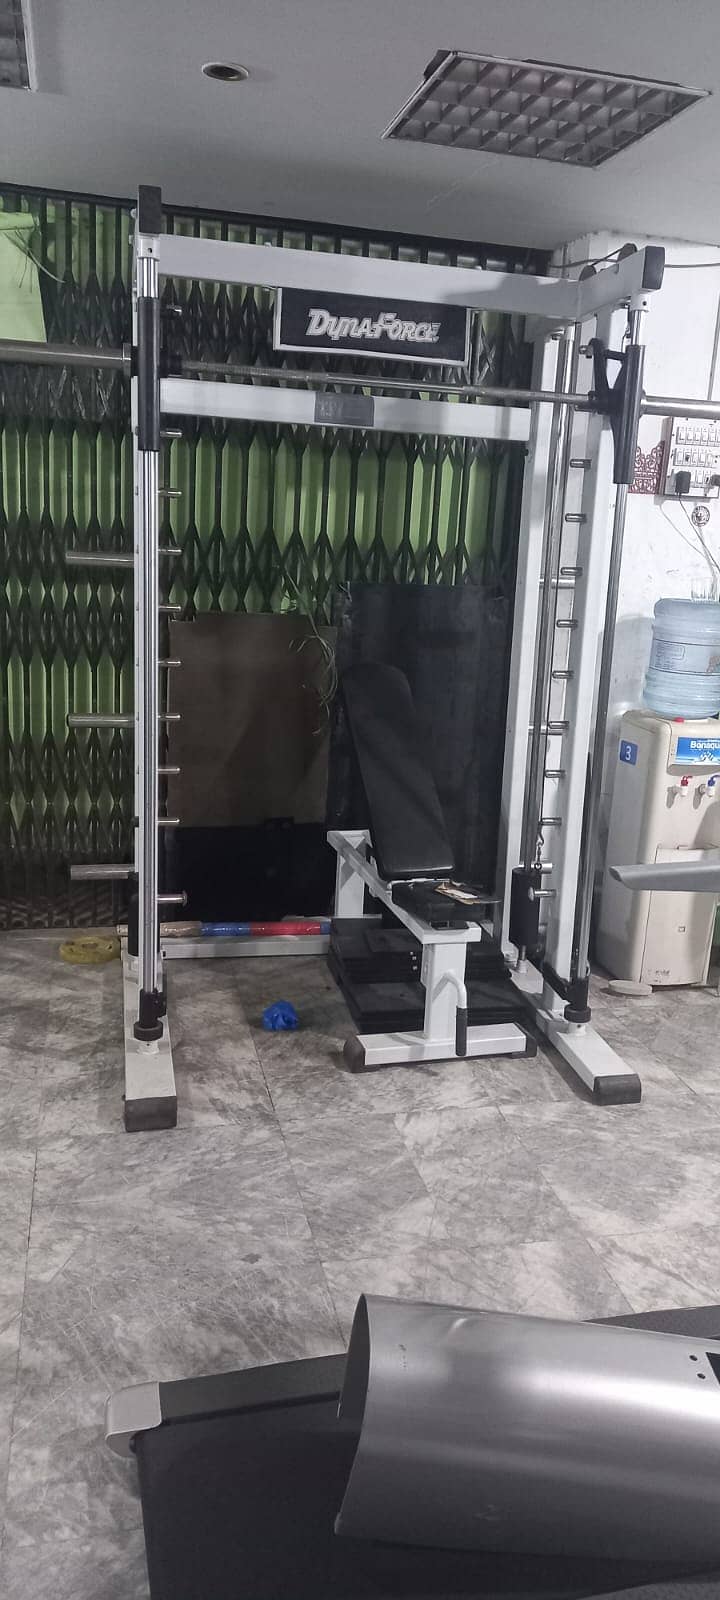 multi functional machine dumbbell gym setup treadmill elliptical plate 12